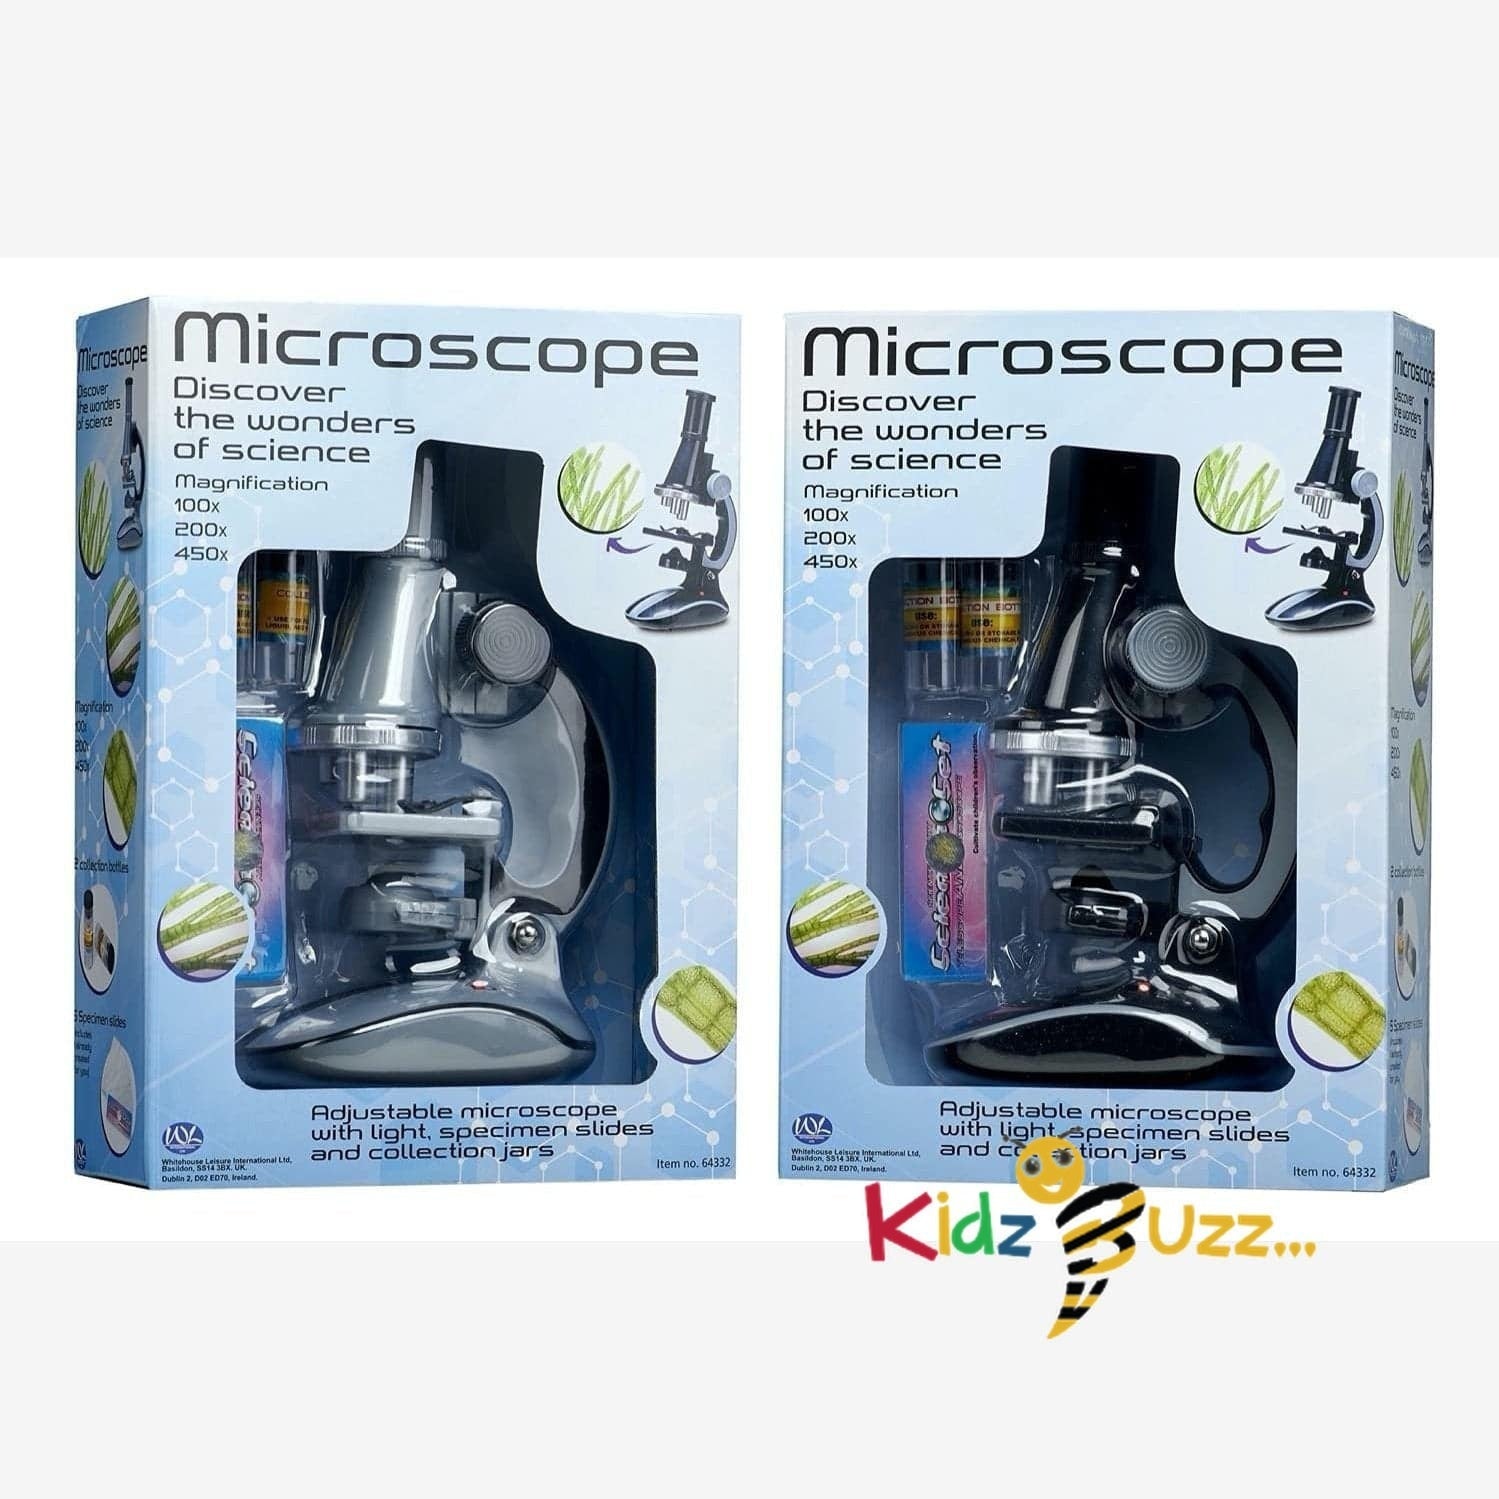 Kids Microscope, 450x, 200x, 100x